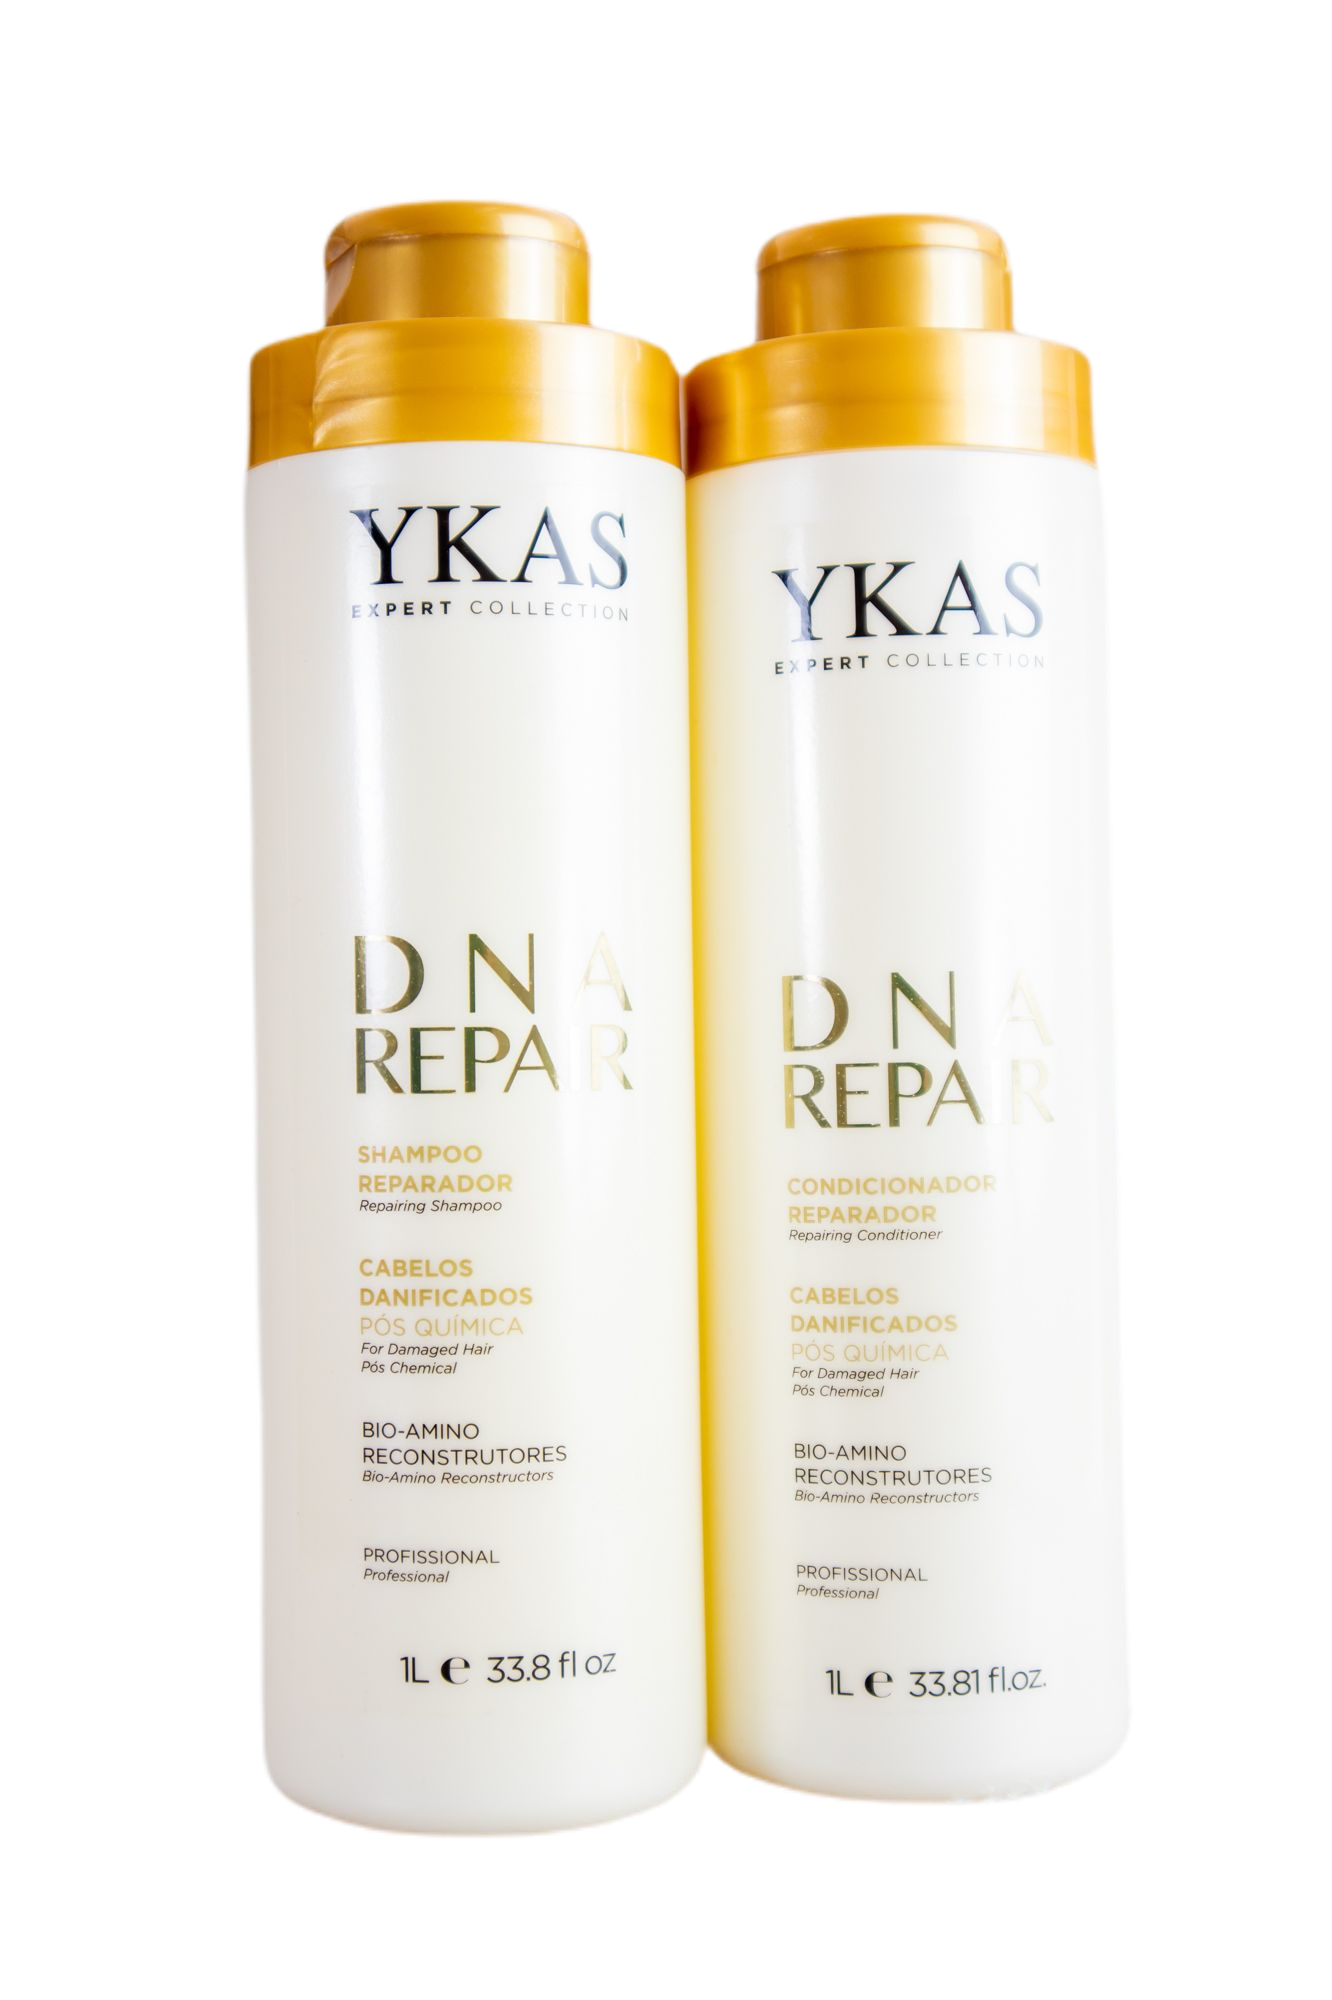 Ykas Brazilian Hair Treatment DNA Repair Kit Salon Duo (2 Products) - YKAS